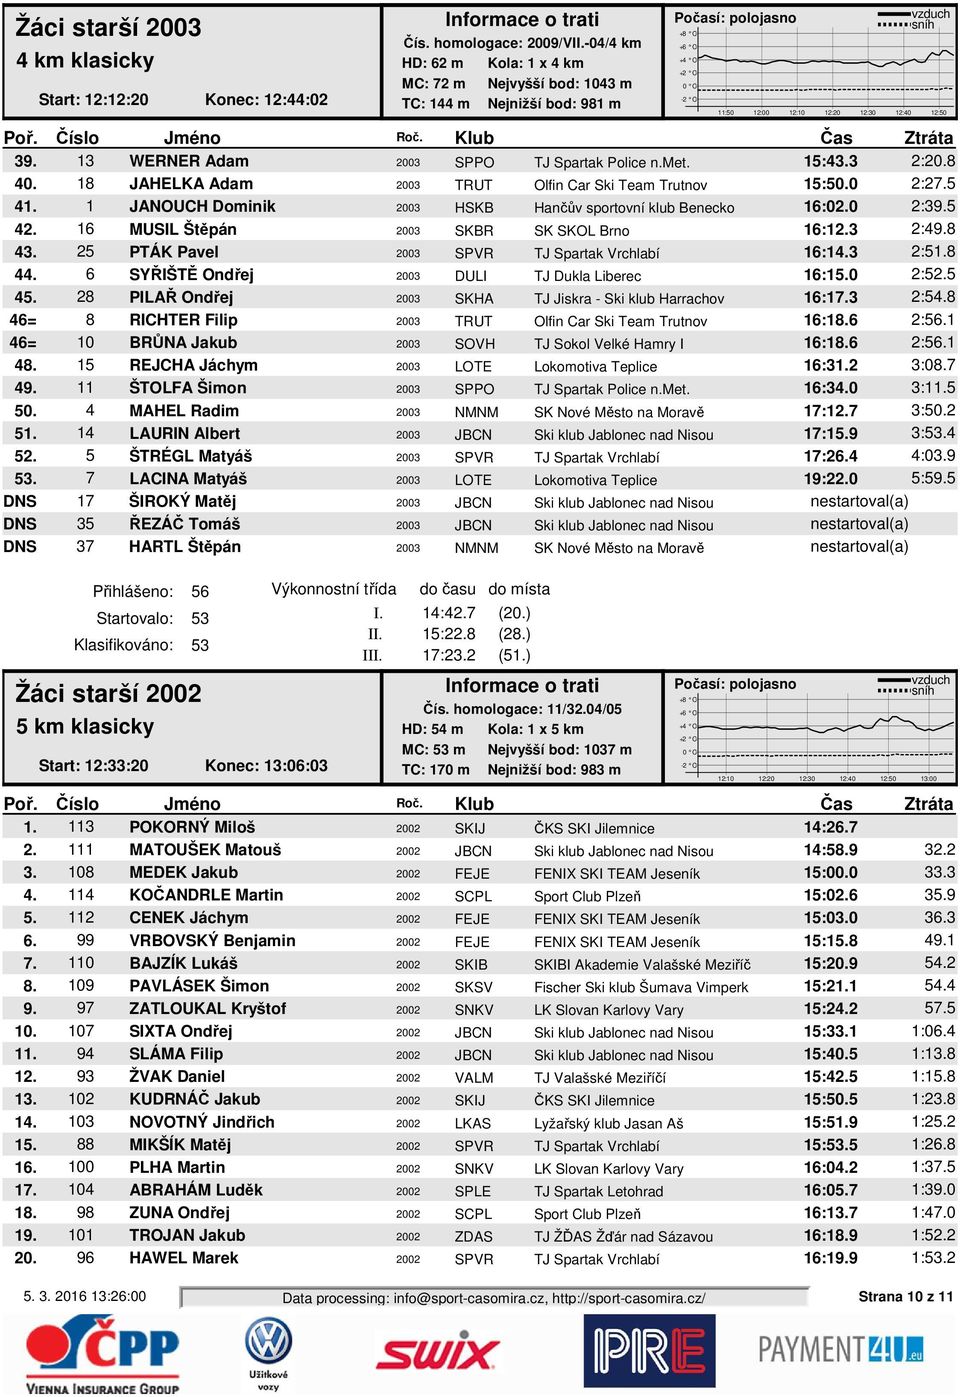 13 WERNER Adam 2003 SPPO TJ Spartak Police n.met. 15:43.3 2:20.8 40. 18 JAHELKA Adam 2003 TRUT Olfin Car Ski Team Trutnov 15:50.0 2:27.5 41.